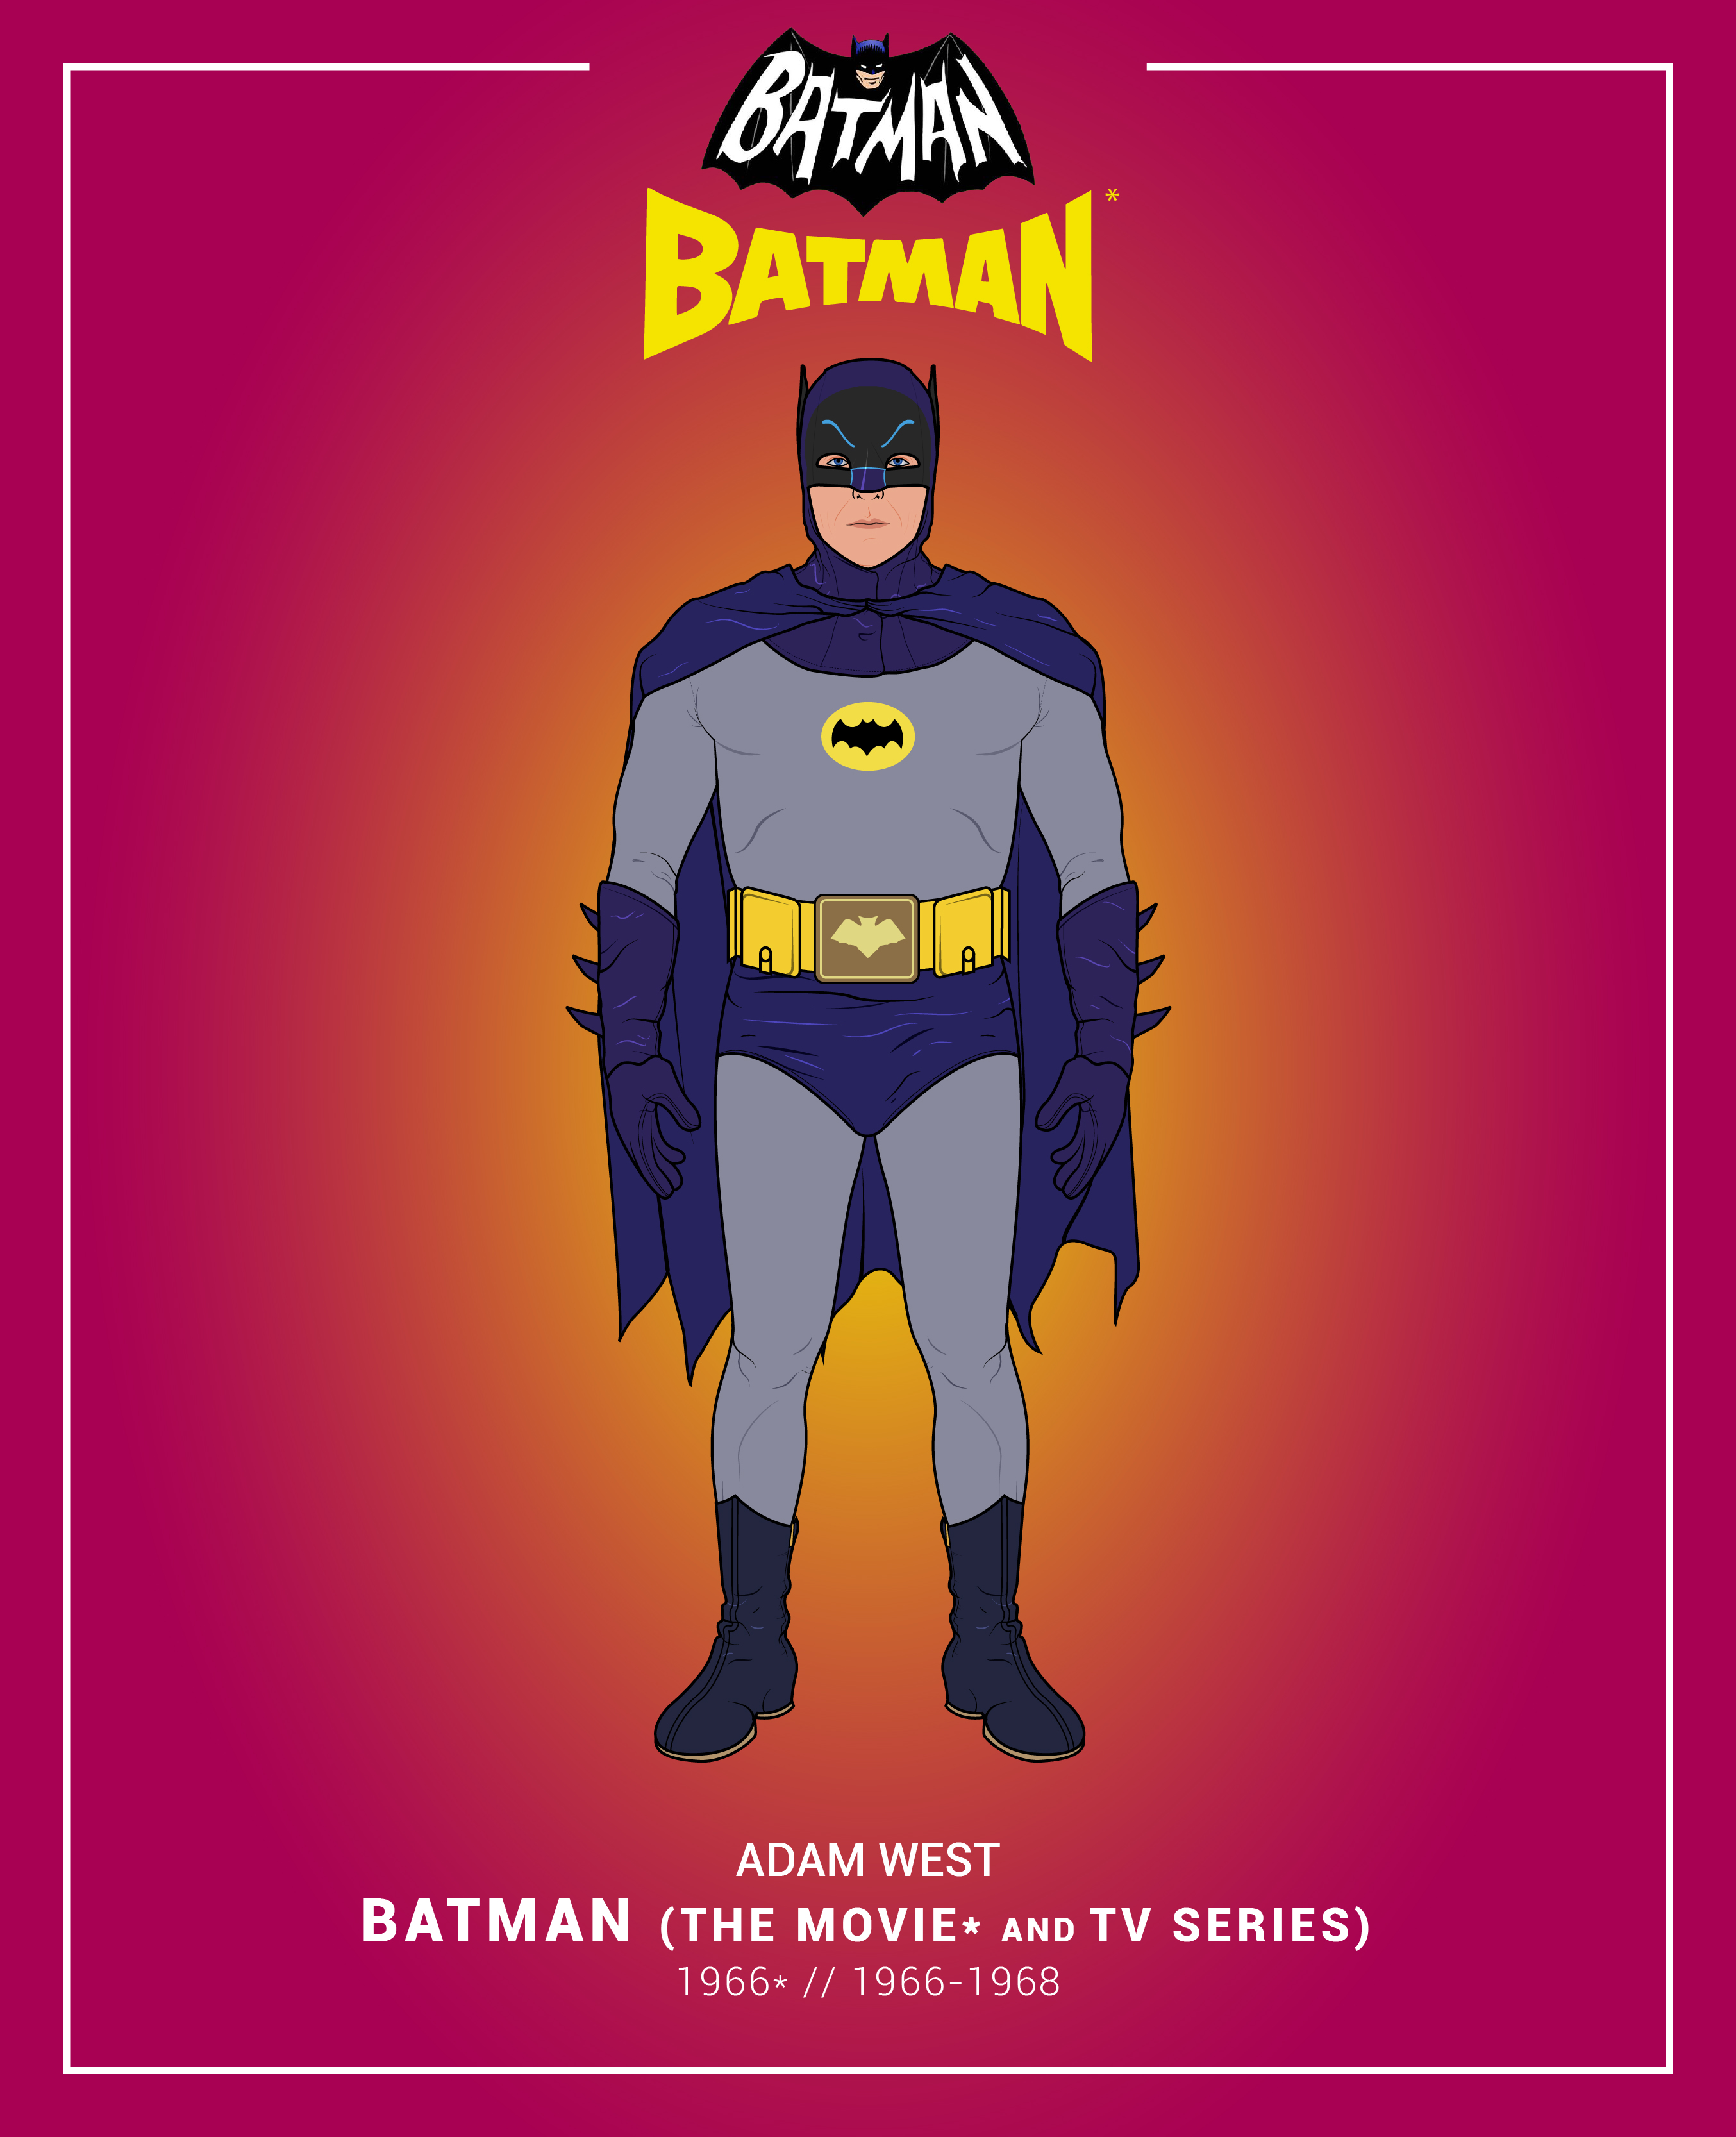 Batman (1966-1968) by efrajoey1 on DeviantArt